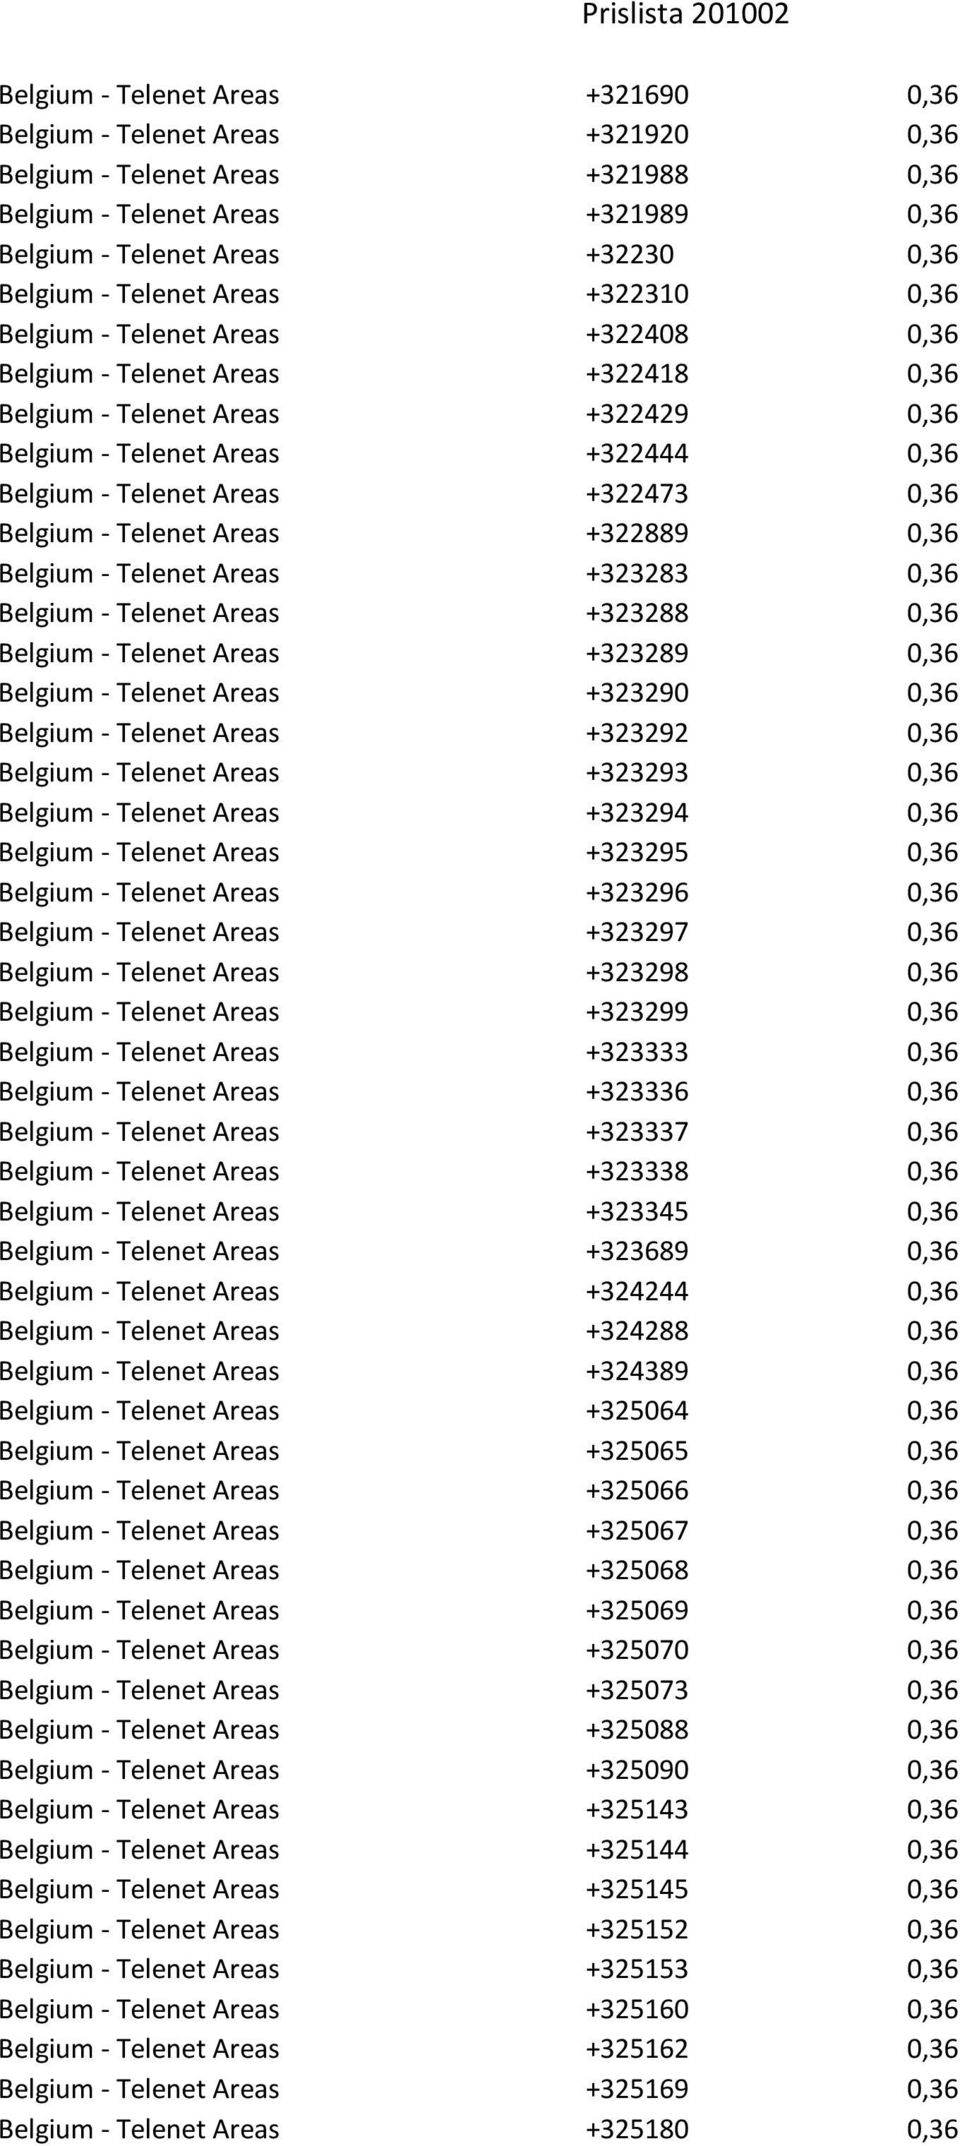 +322473 0,36 Belgium - Telenet Areas +322889 0,36 Belgium - Telenet Areas +323283 0,36 Belgium - Telenet Areas +323288 0,36 Belgium - Telenet Areas +323289 0,36 Belgium - Telenet Areas +323290 0,36